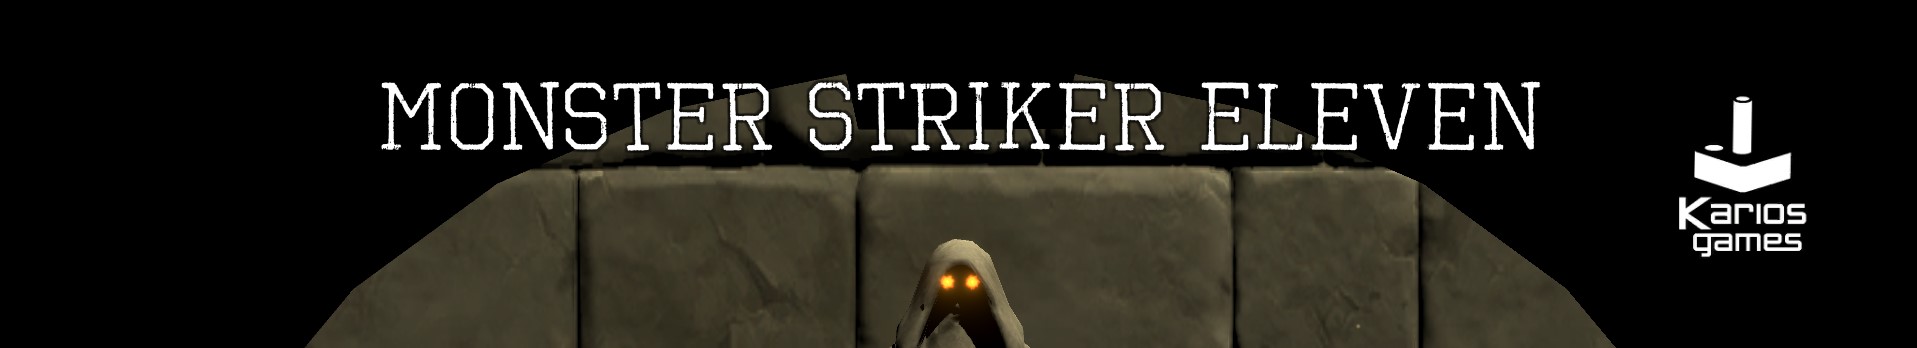 Monster Striker Eleven